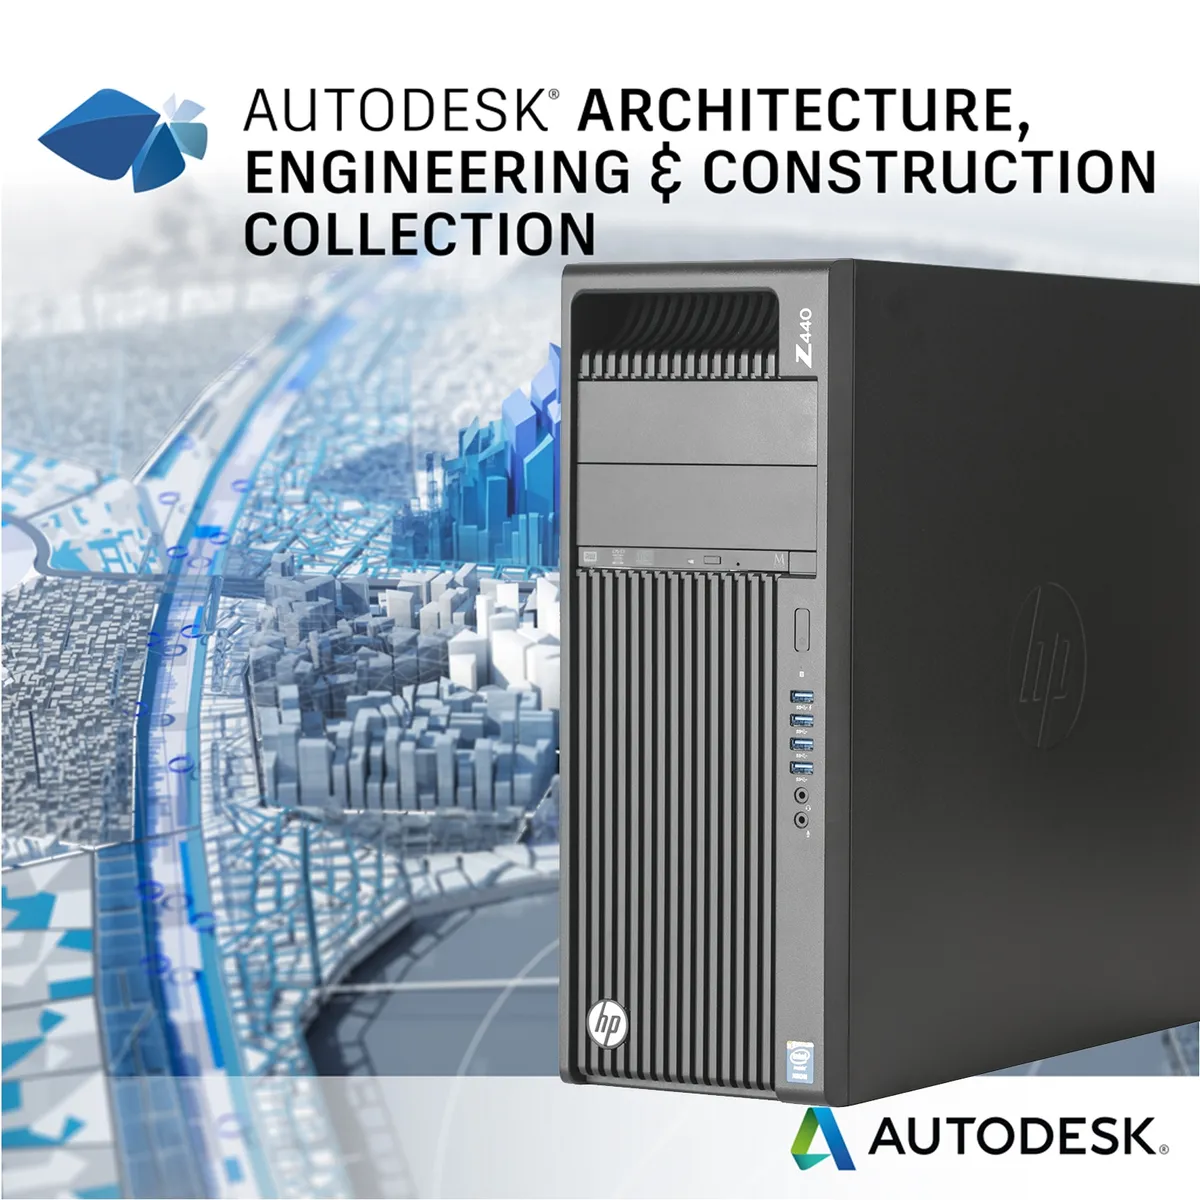 AutoDesk Architecture, Engineering & Construction Pre-Configured Workstation